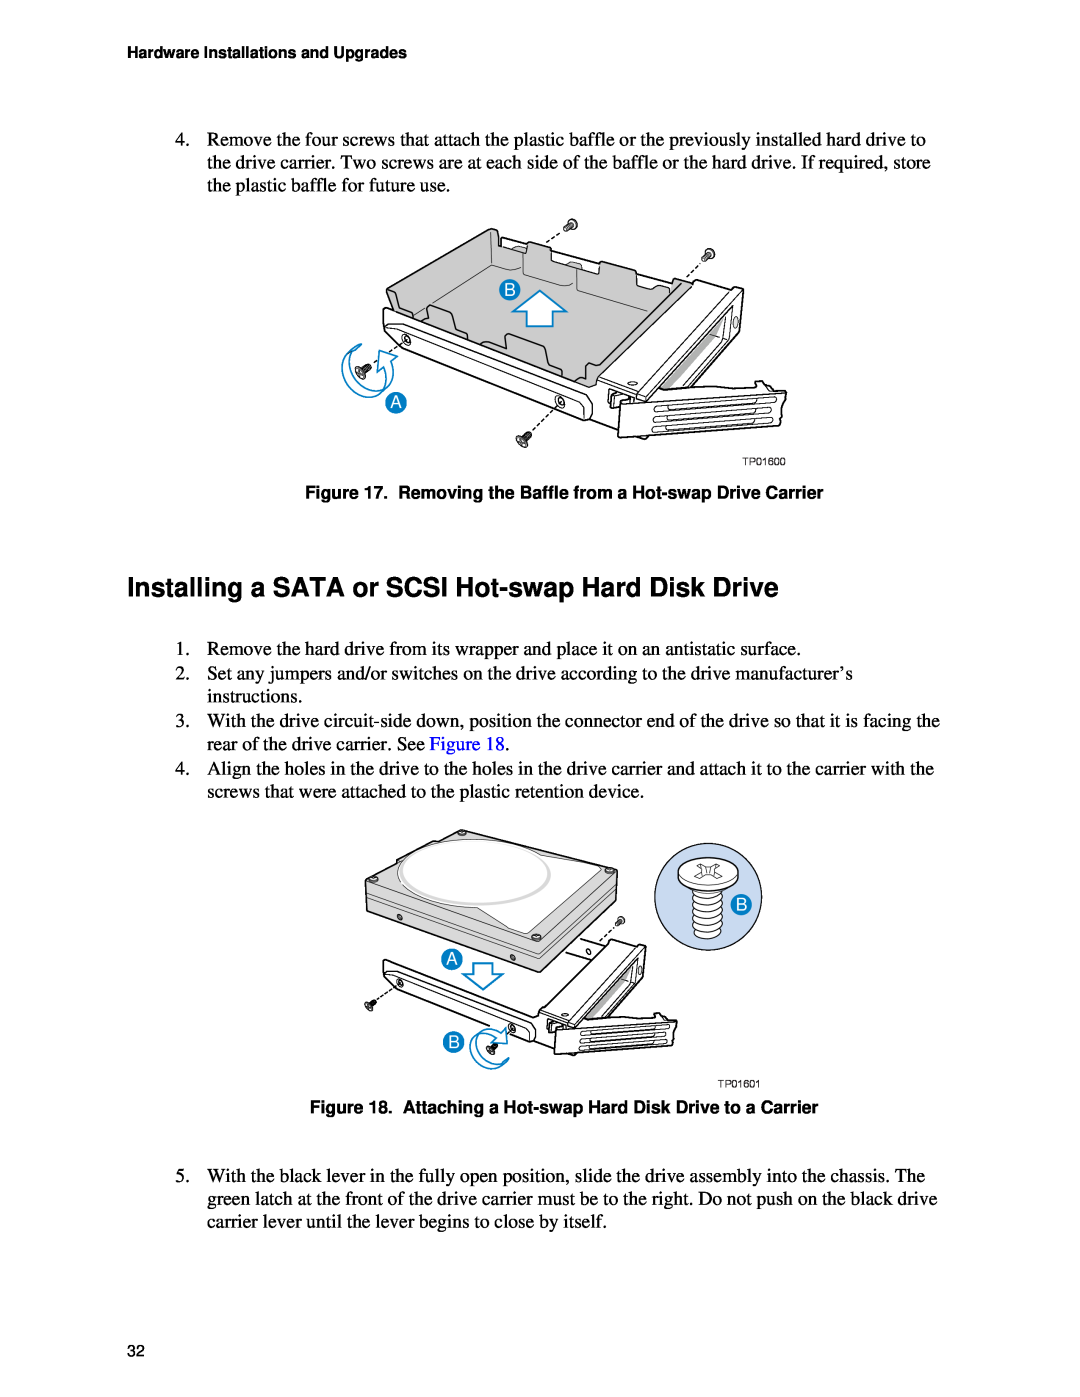 Intel SR1450 manual Installing a SATA or SCSI Hot-swapHard Disk Drive, B A B 